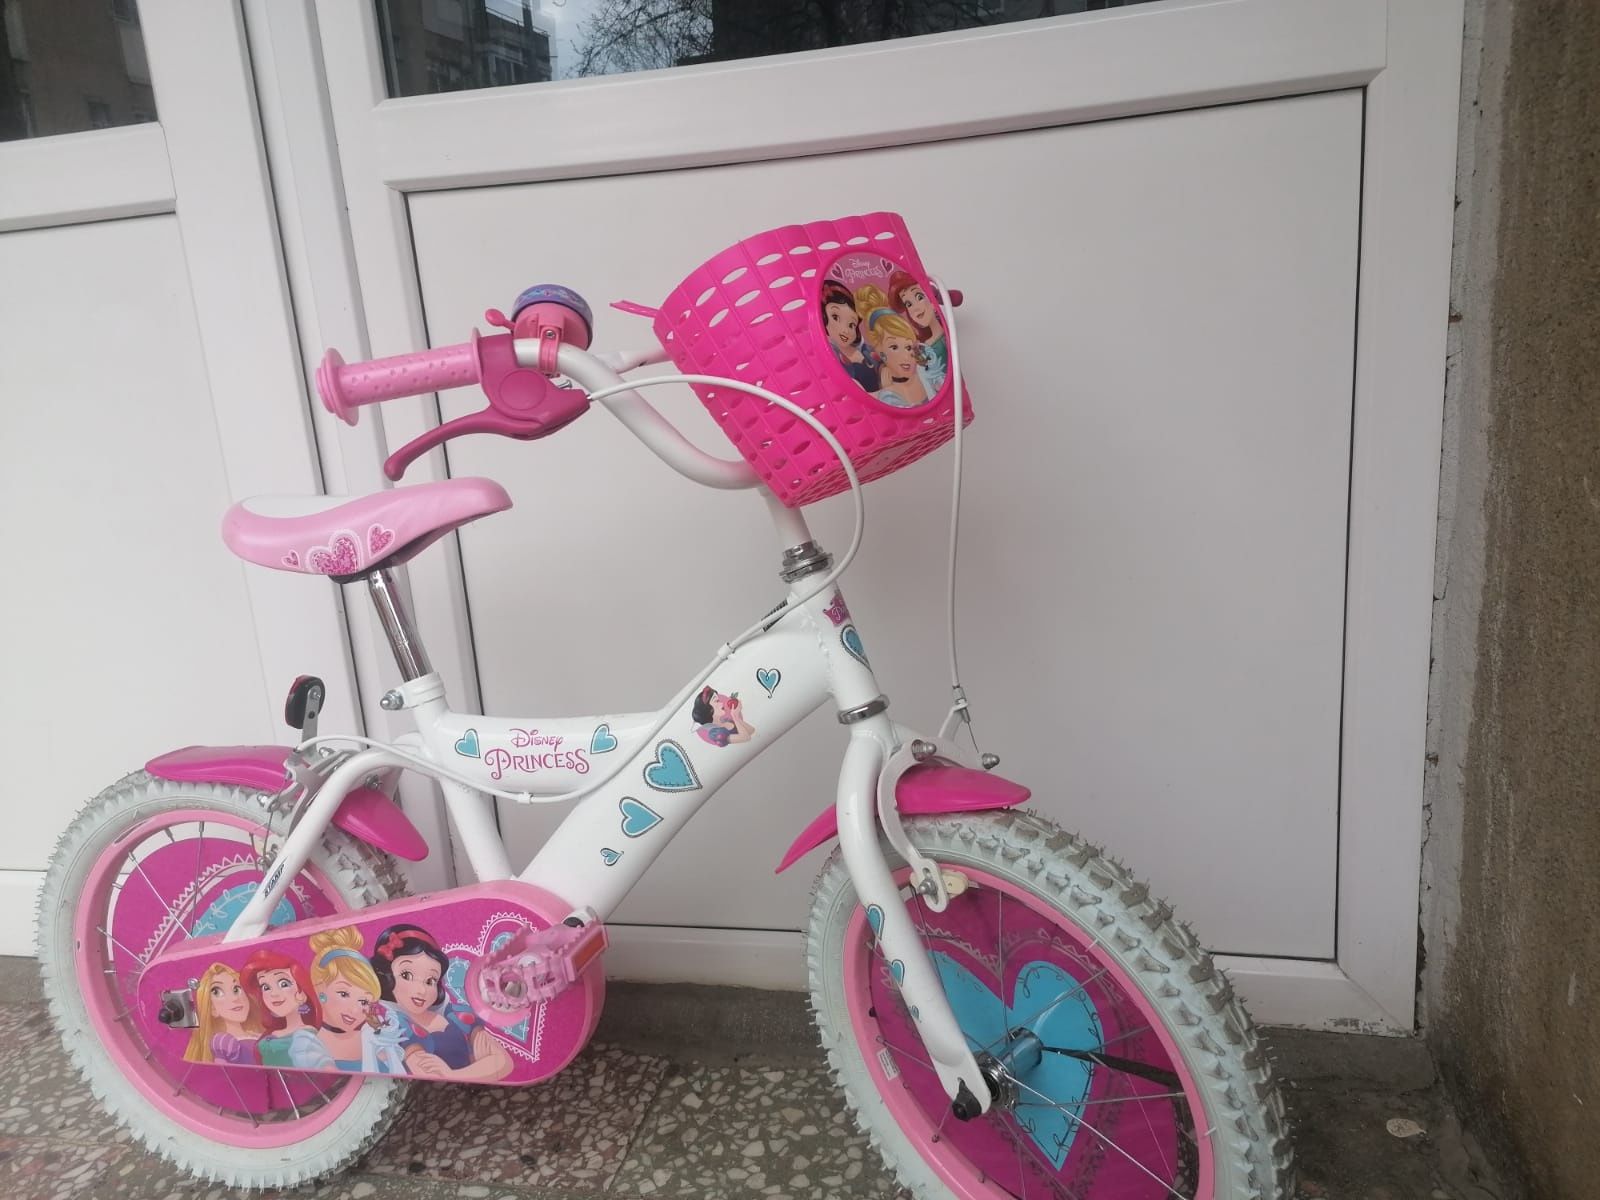 Bicicleta copii STAMP Disney Princess 16 inch + cască + kit protecție